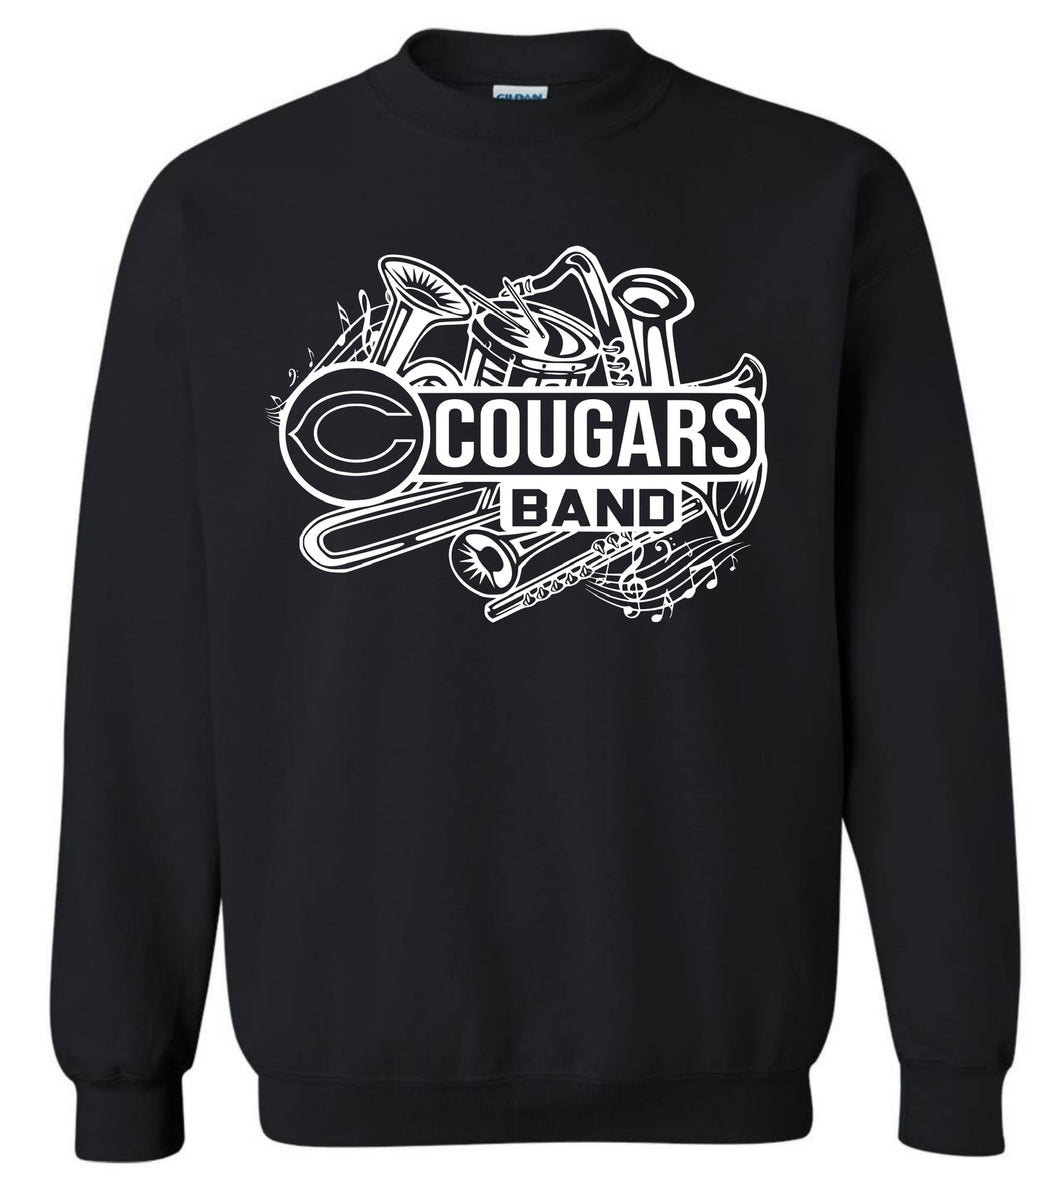 Cougars Band Instrument Sweatshirt